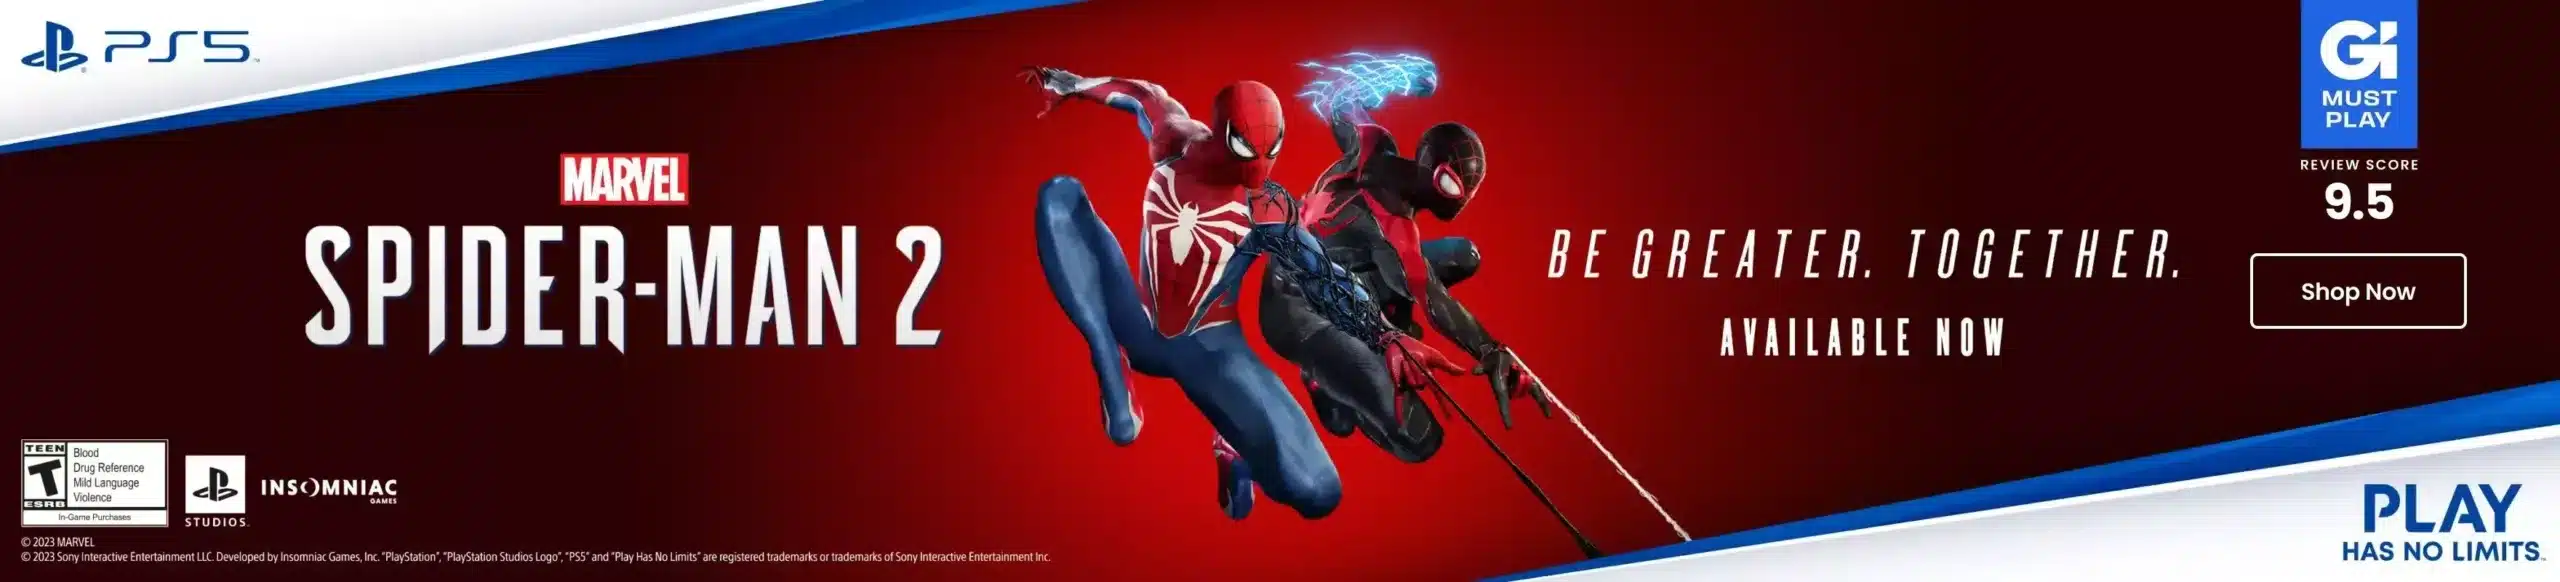 Spider-Man-2-Promo